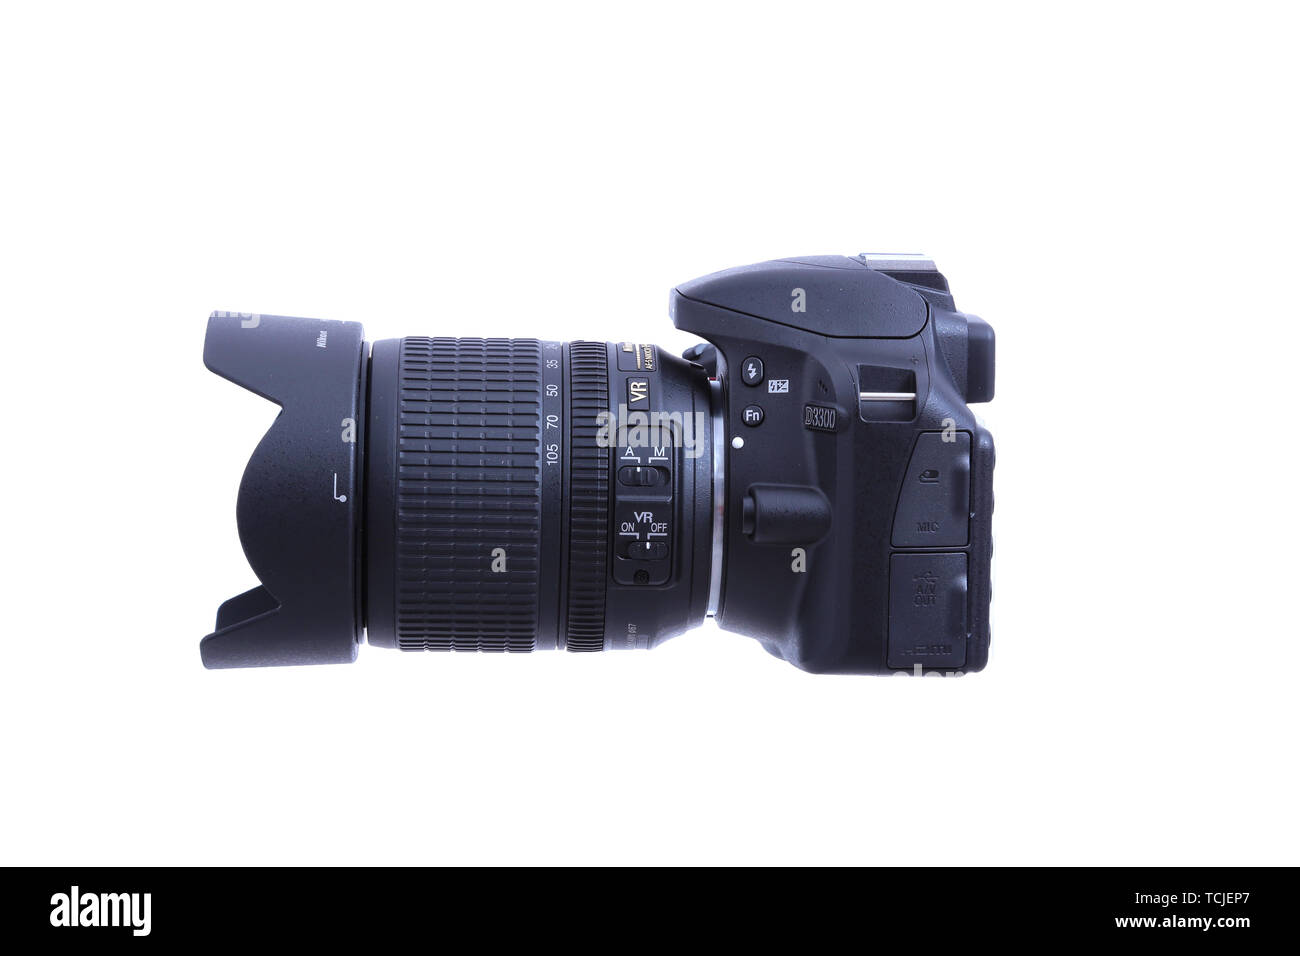 KYIV, UKRAINE - JULE 10, 2015: Nikon d3300 camera with nikkor 18-105mm lens  on white background Stock Photo - Alamy